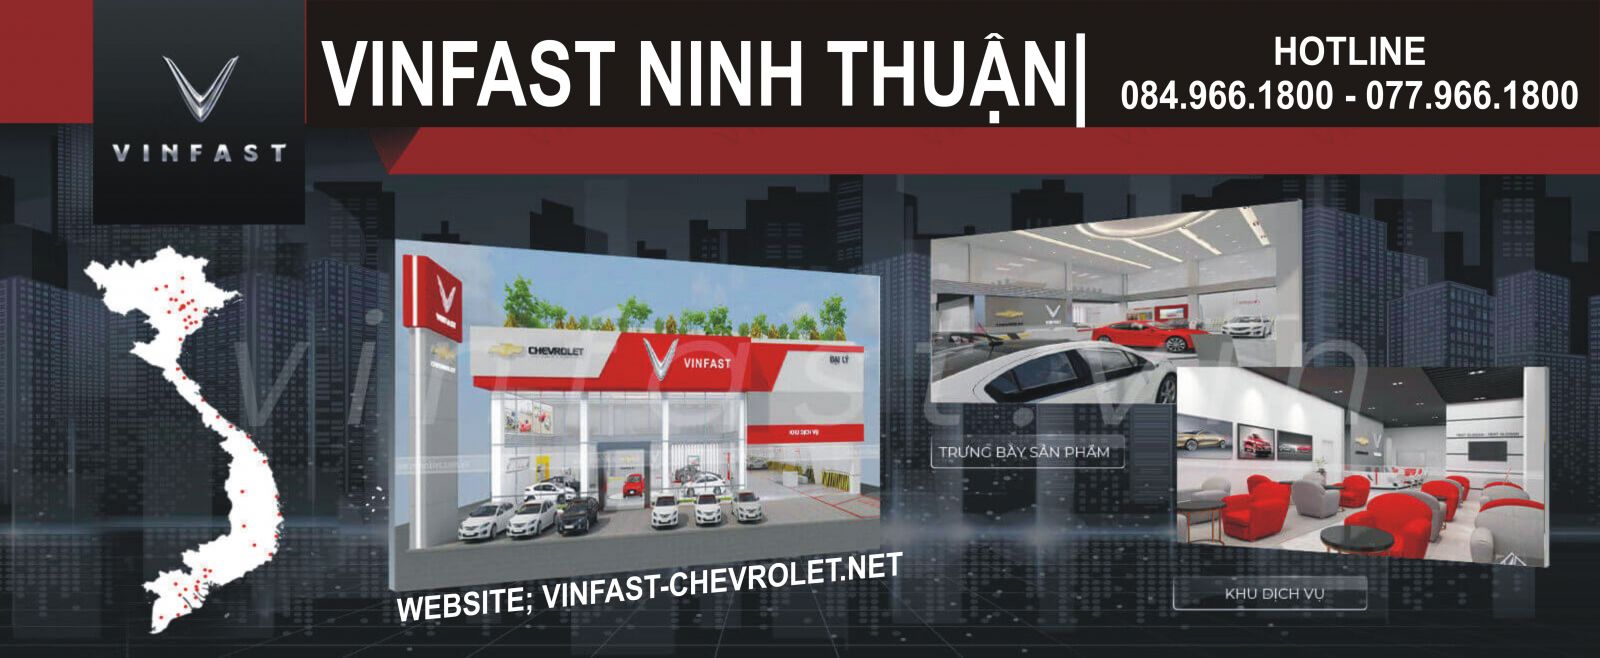 vinfast Ninh Thuận